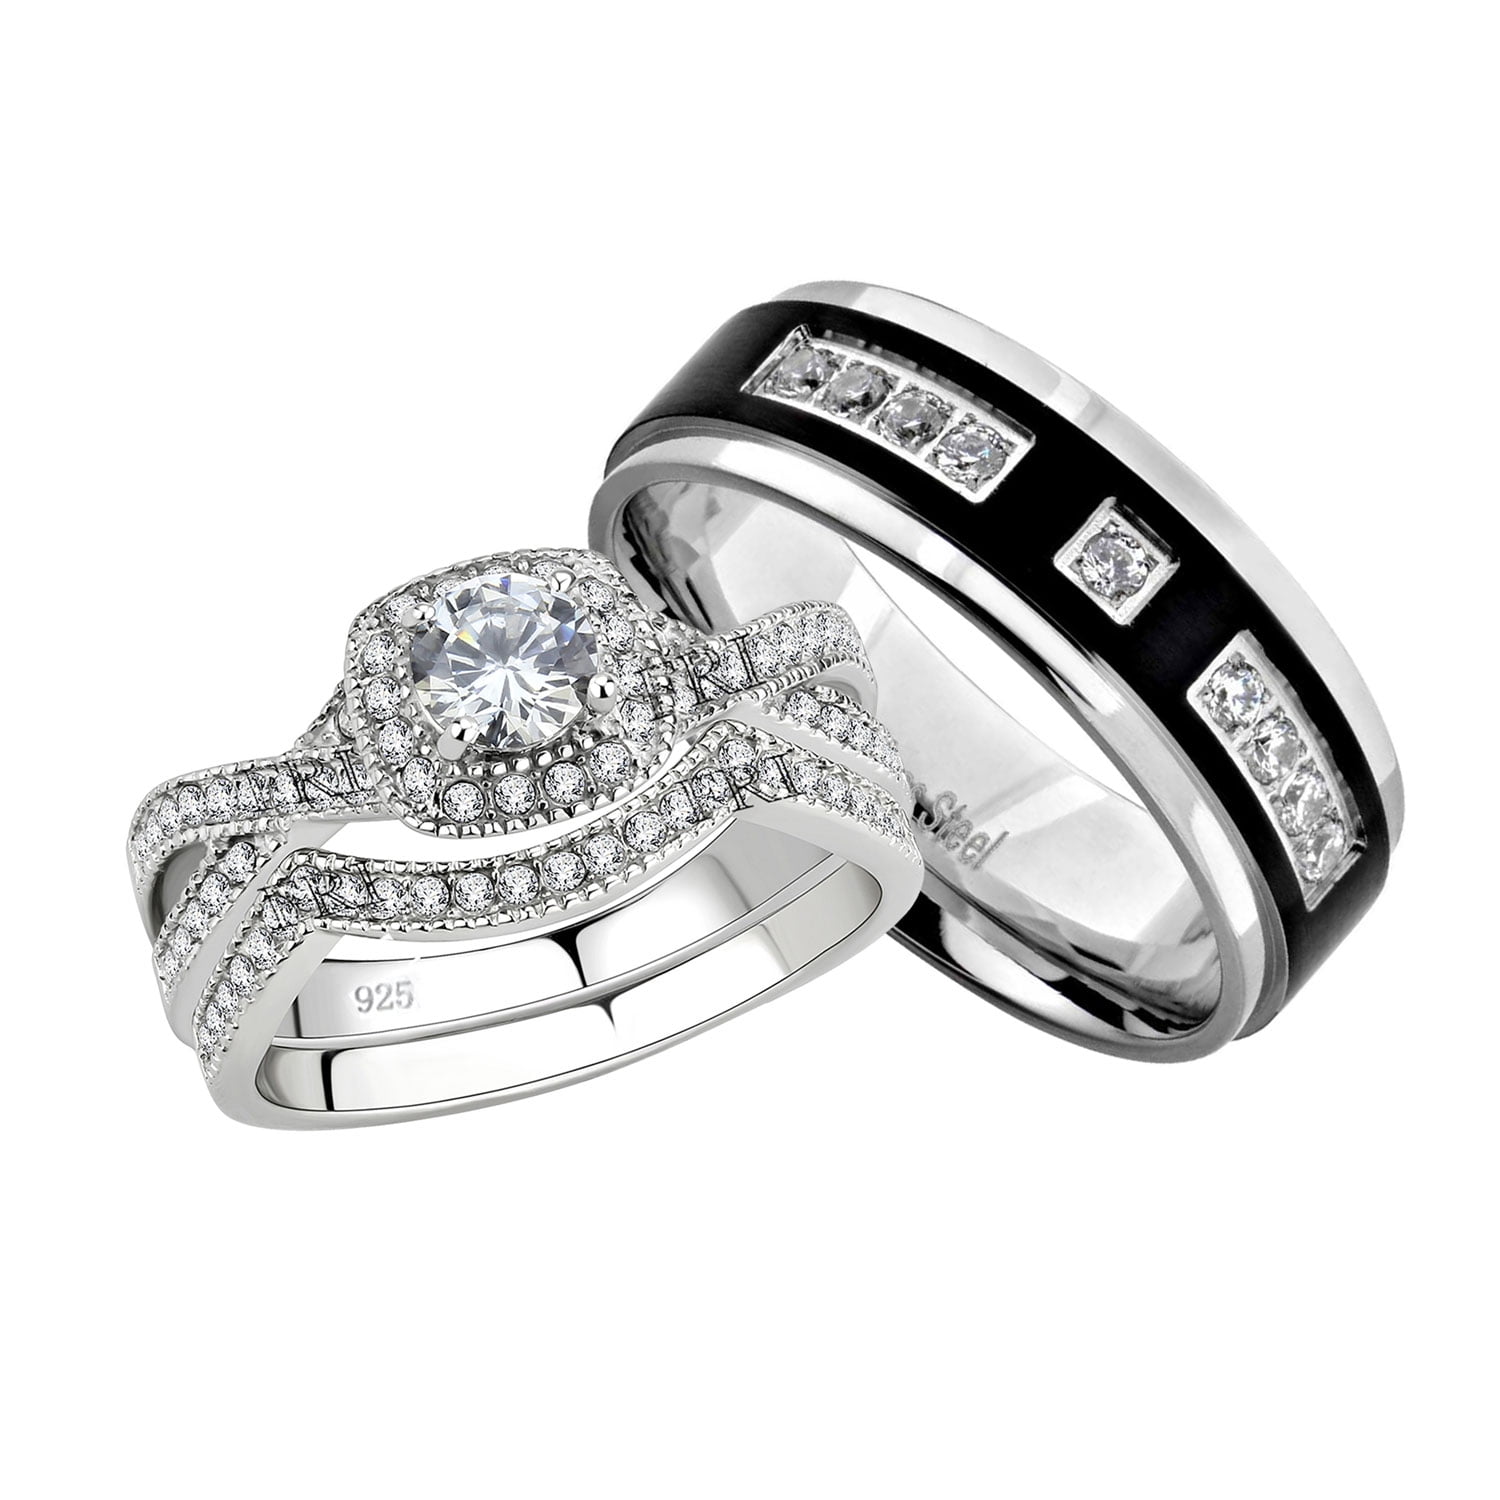 Stainless Steel Women's Infinity Wedding Ring Set Halo Round Cut Cubic Zirconia 